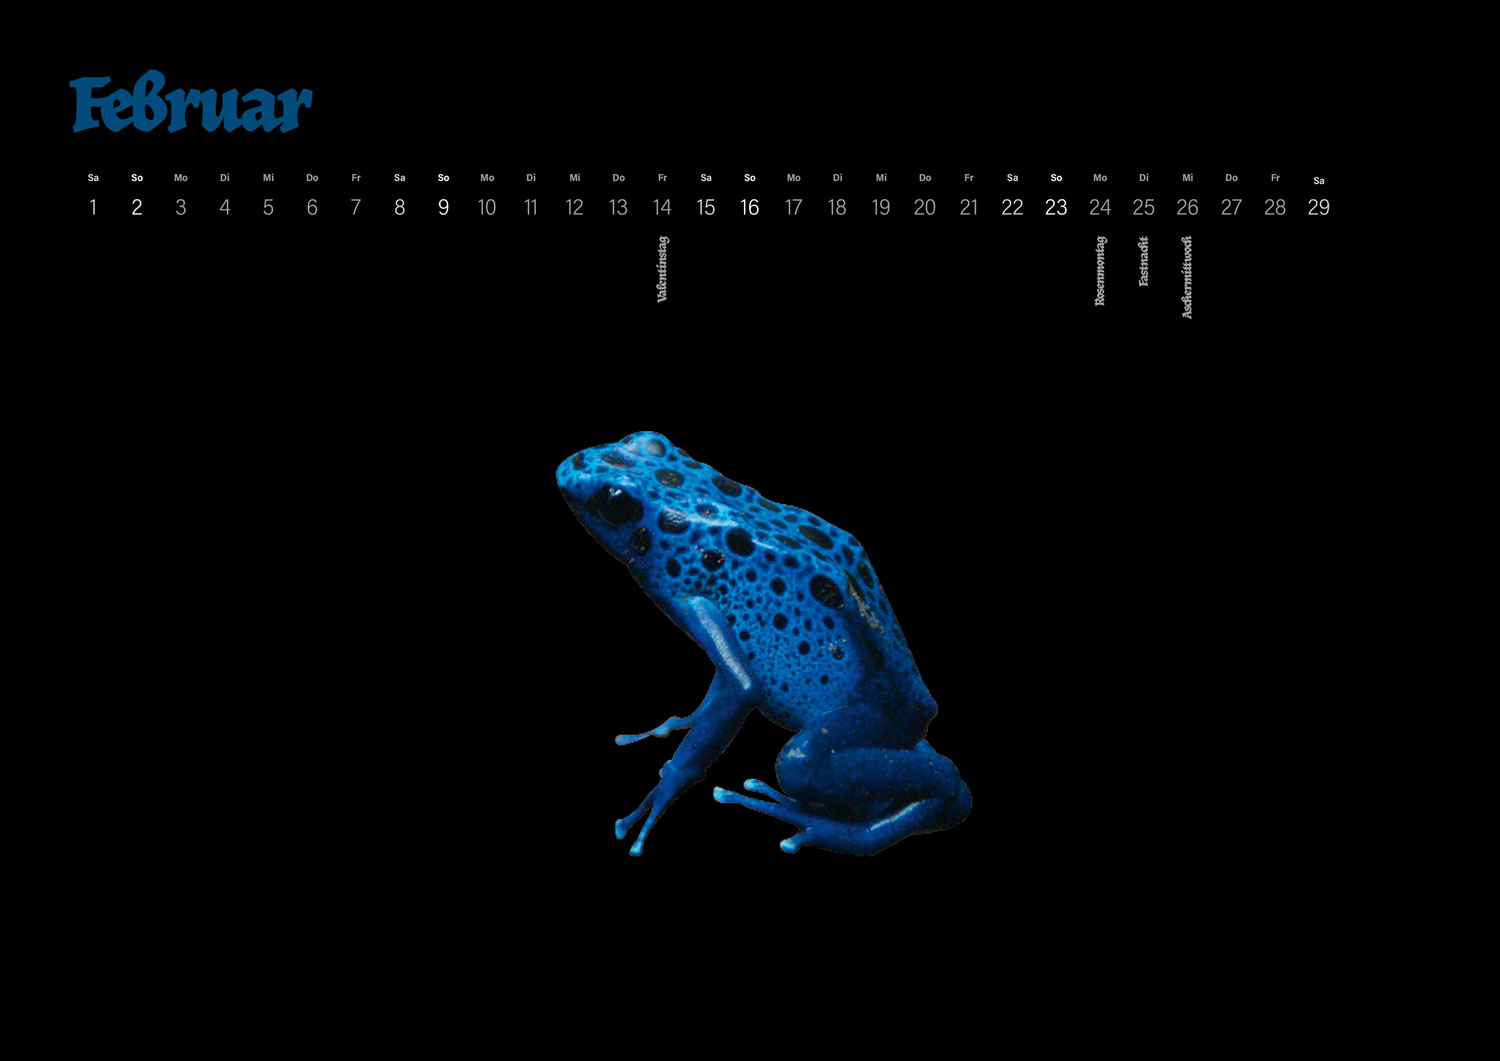 Calidario-PANTONE-Kalender 2020 im Februar mit Froschmotiv